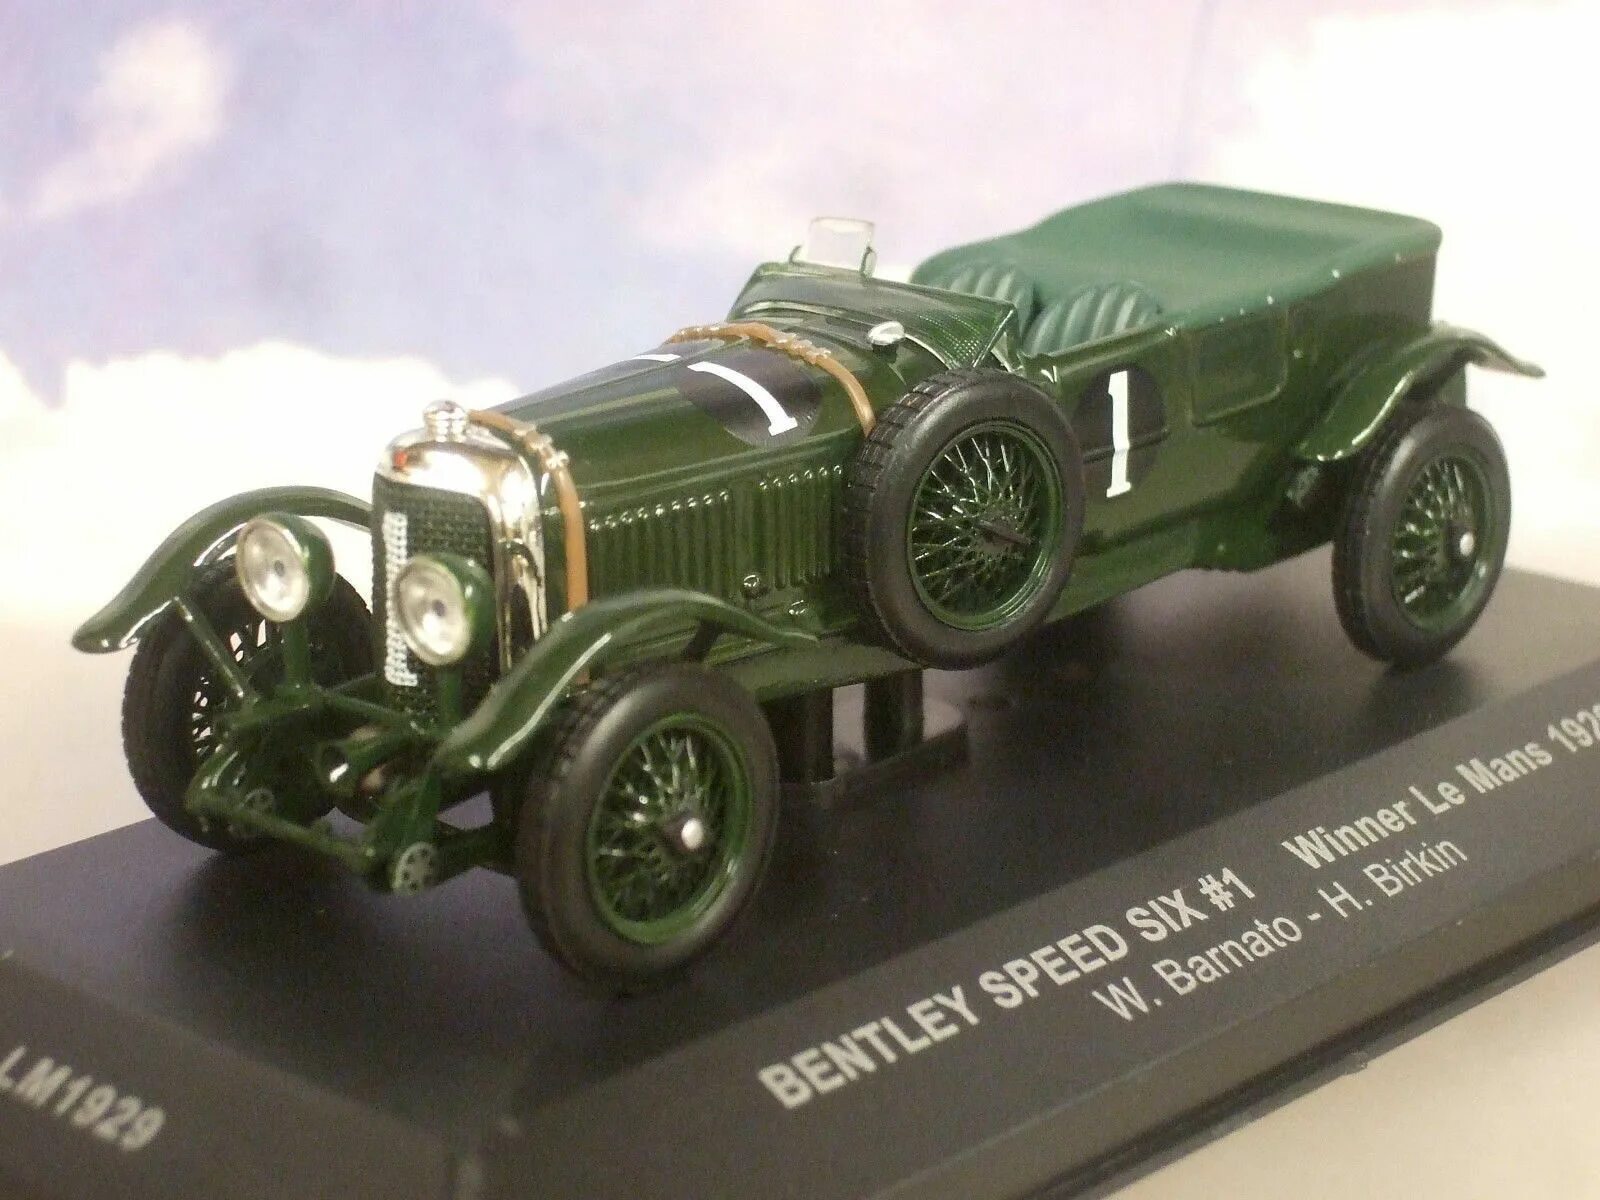 Ixo 1 43. Bentley le mans 1929. Dupont car model g Lemans 1929 года. Bentley Speed Six №1 winner 24h le mans 1929 (Woolf Barnato - Sir Henry «tim» Birkin).